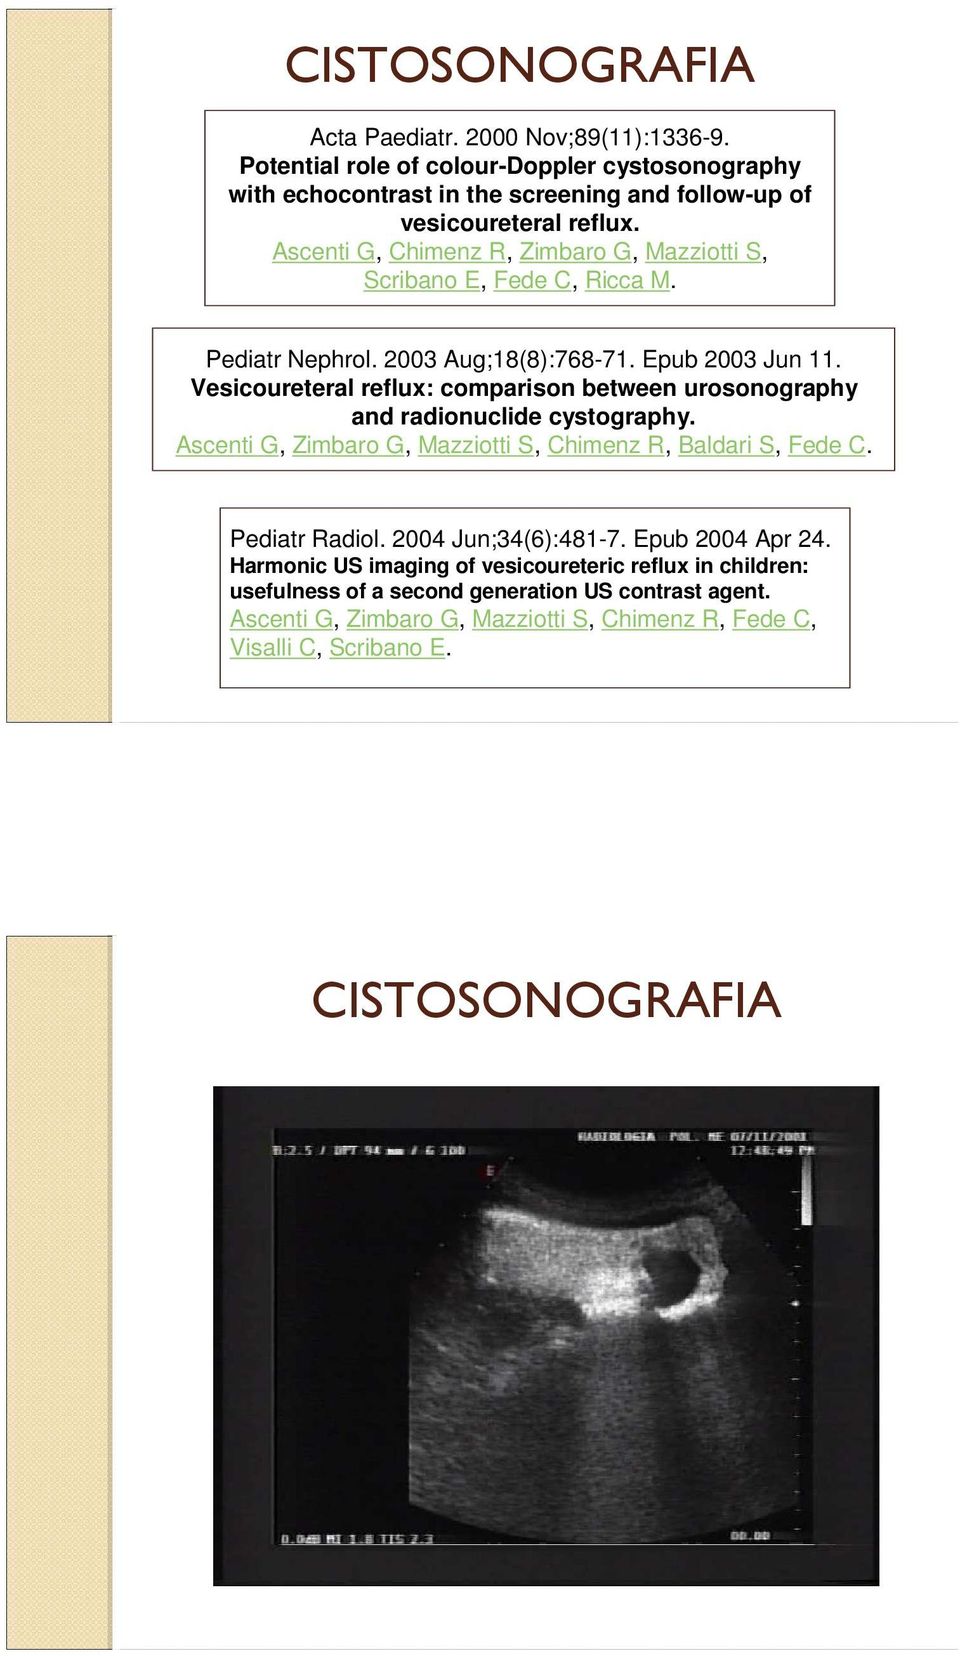 Vesicoureteral reflux: comparison between urosonography and radionuclide cystography. Ascenti G, Zimbaro G, Mazziotti S, Chimenz R, Baldari S, Fede C. Pediatr Radiol.